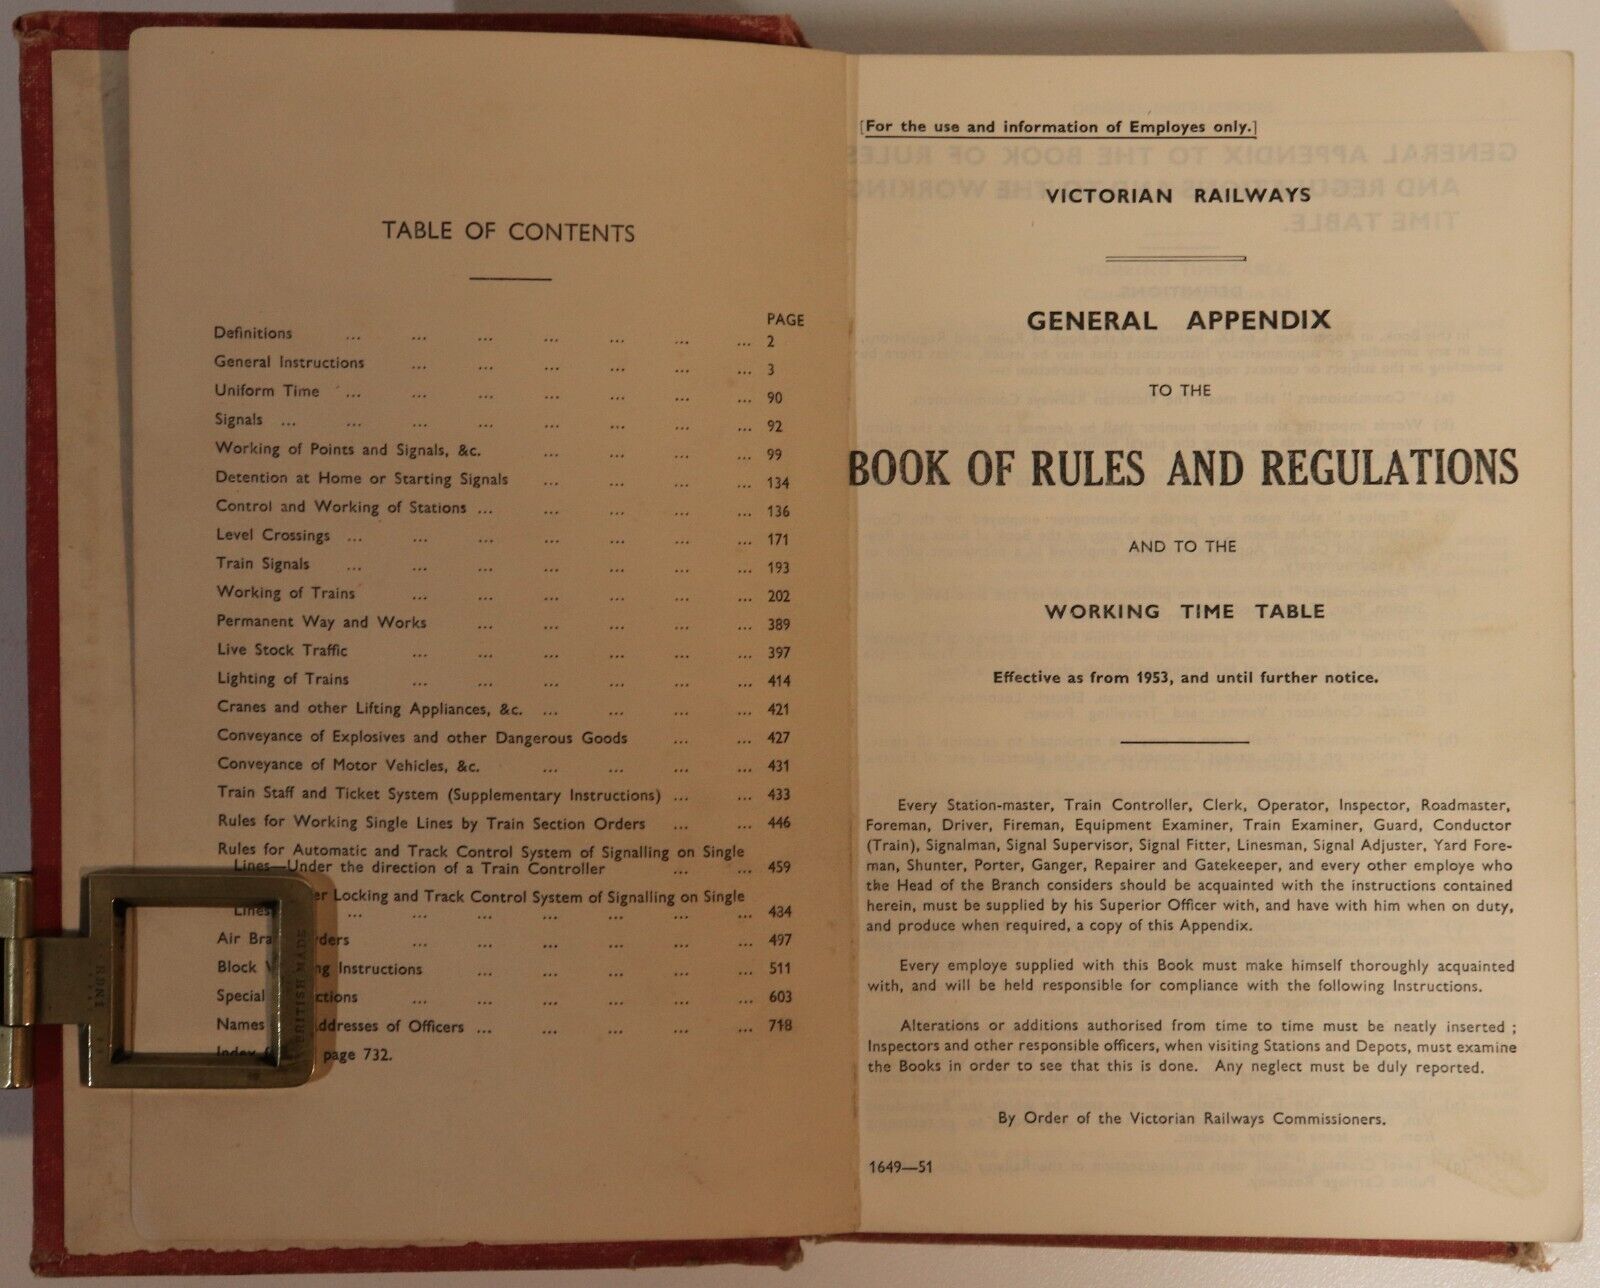 Victorian Railways General Appendix - 1953 - Australia Train Books